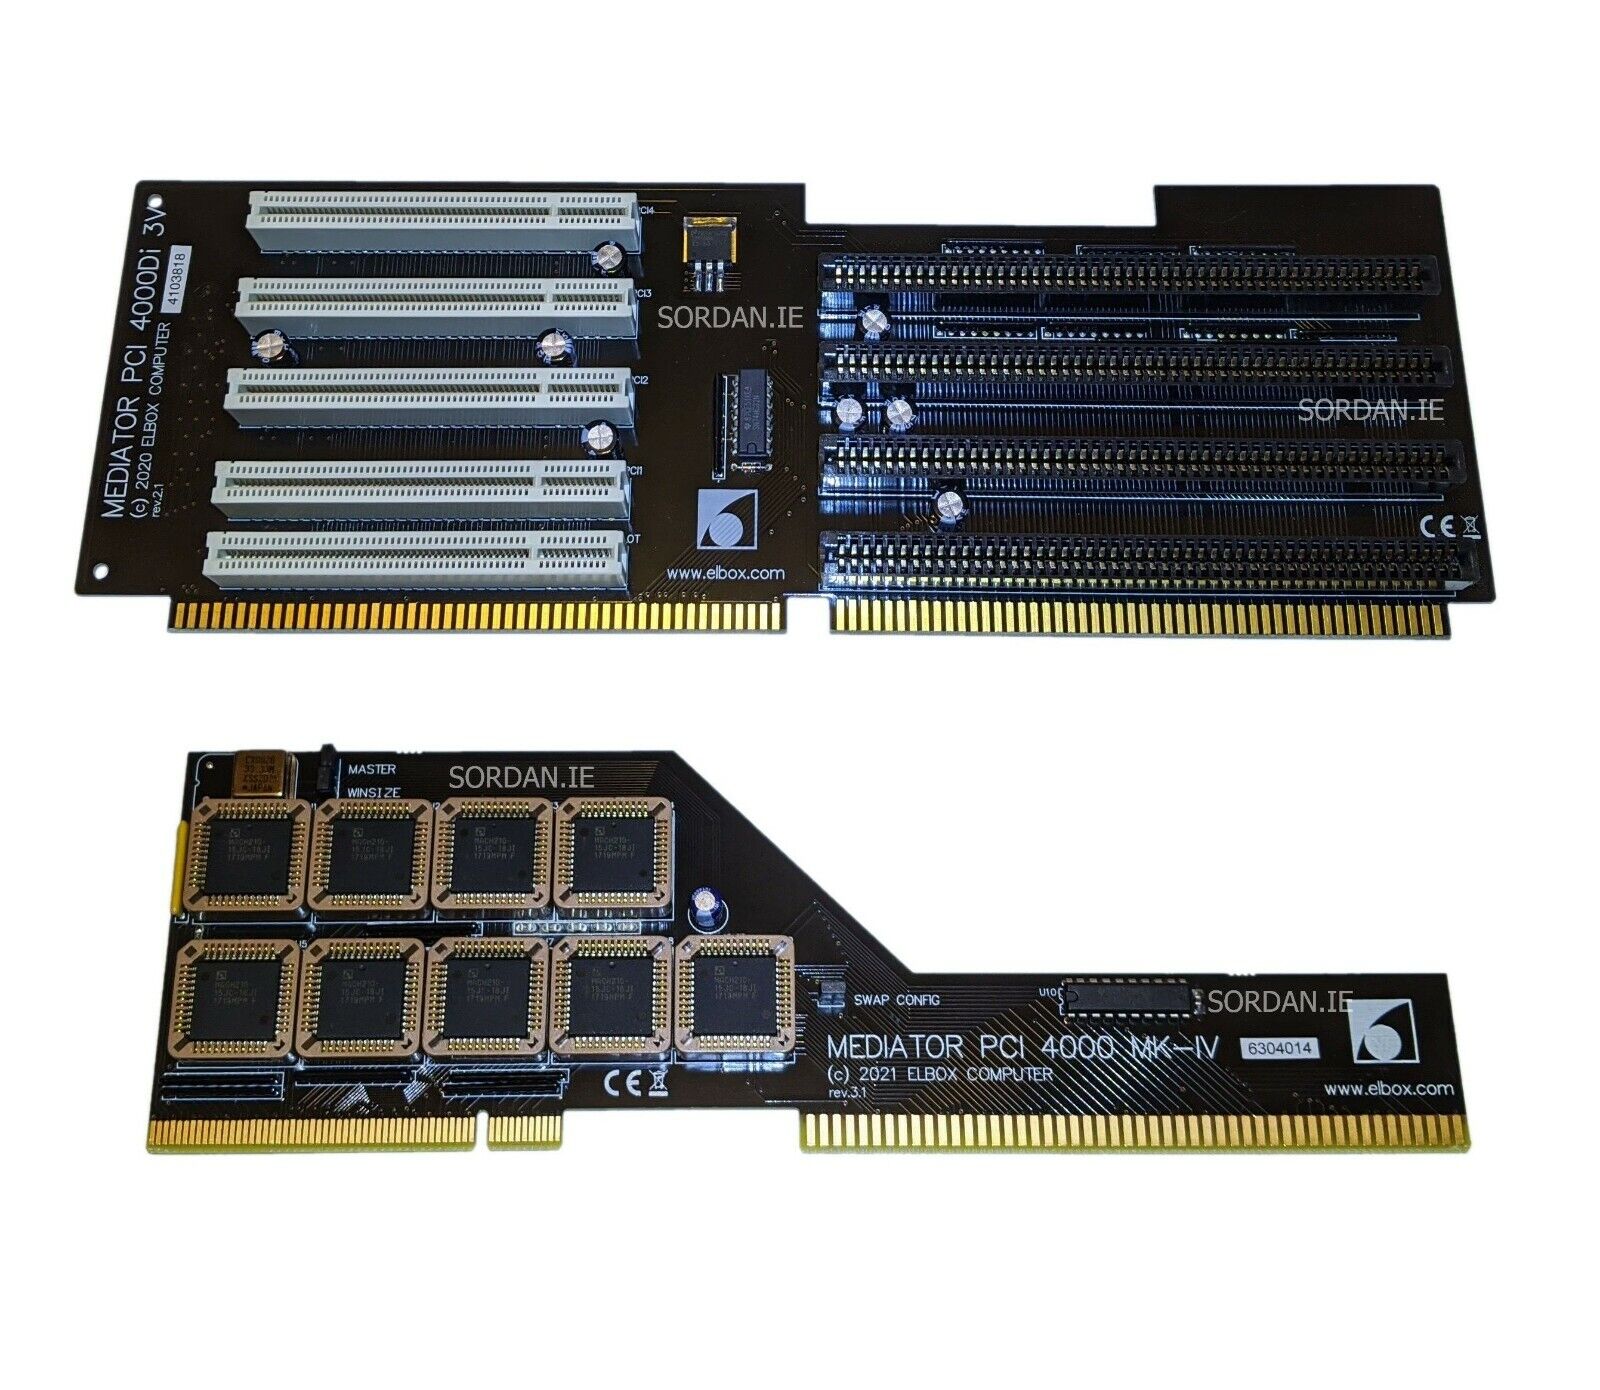 New Mediator PCI 4000Di 3V MK-III 4x PCI 3x Zorro III/II Slots - Amiga 4000 #842